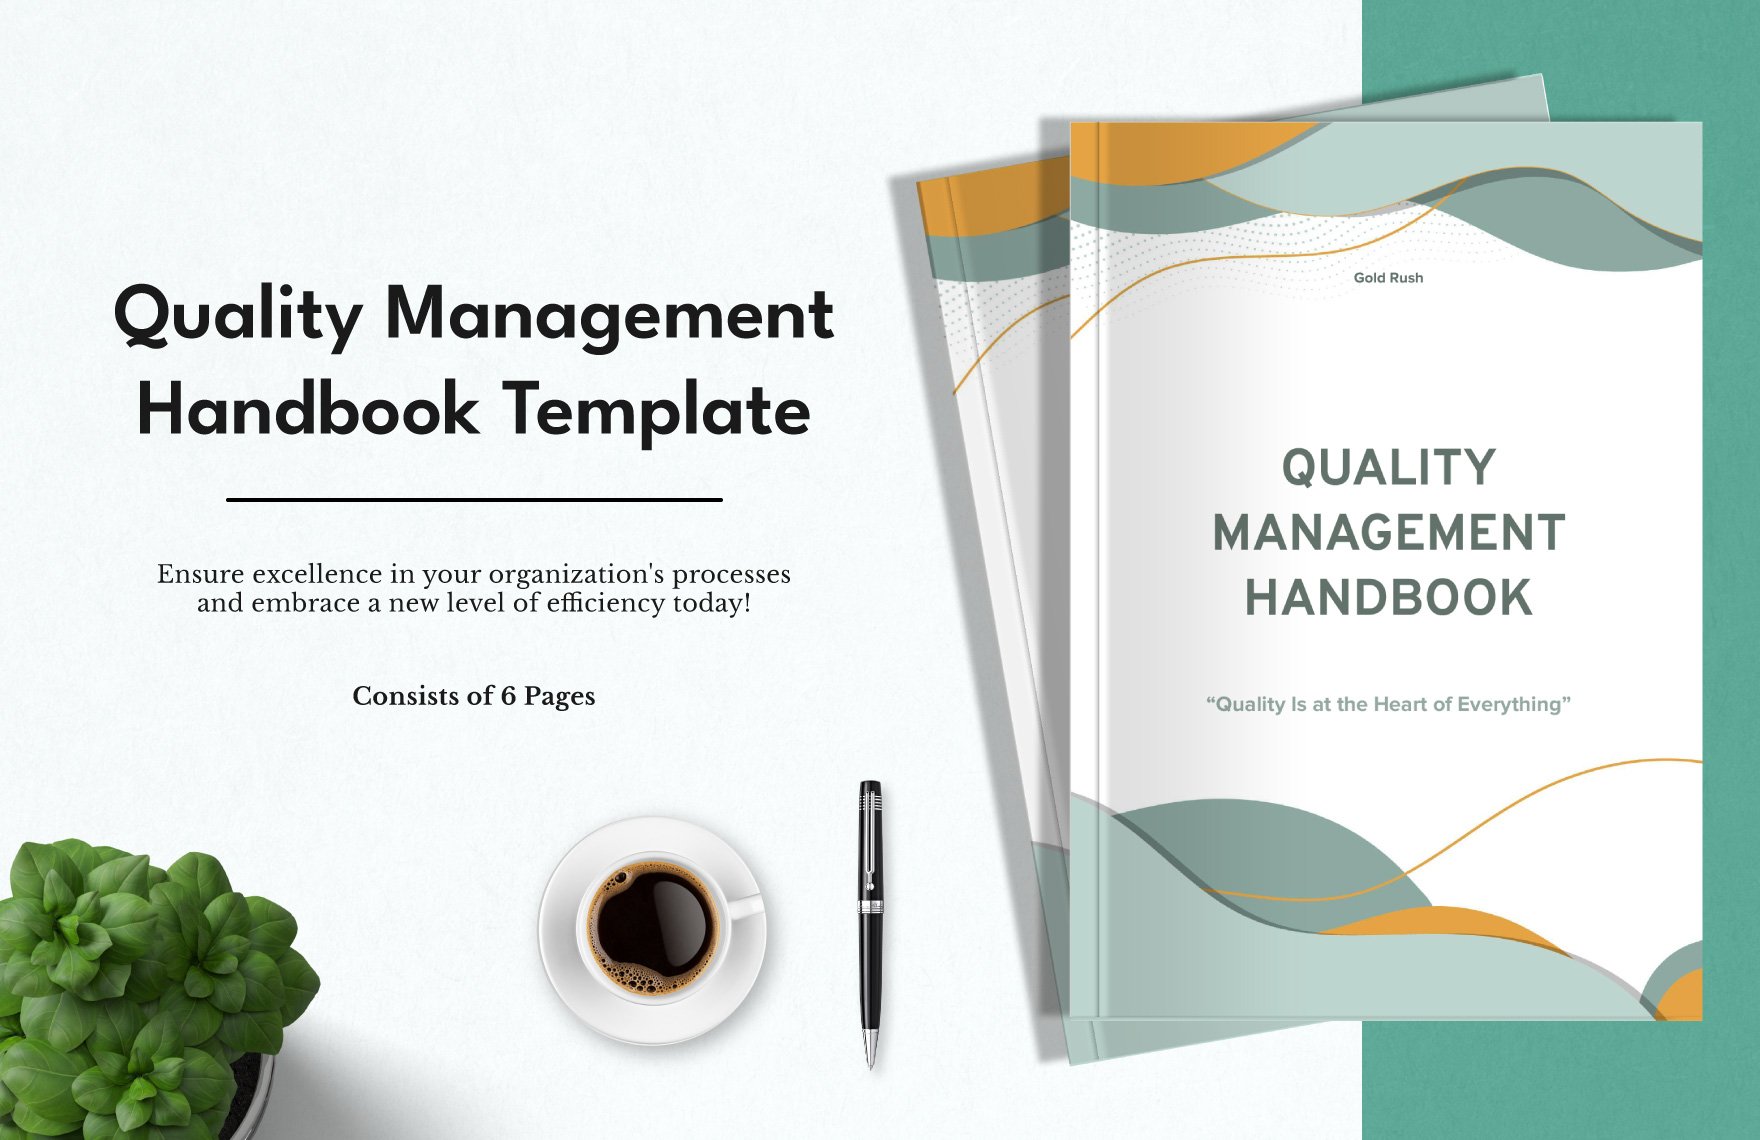 Quality Management Handbook Template